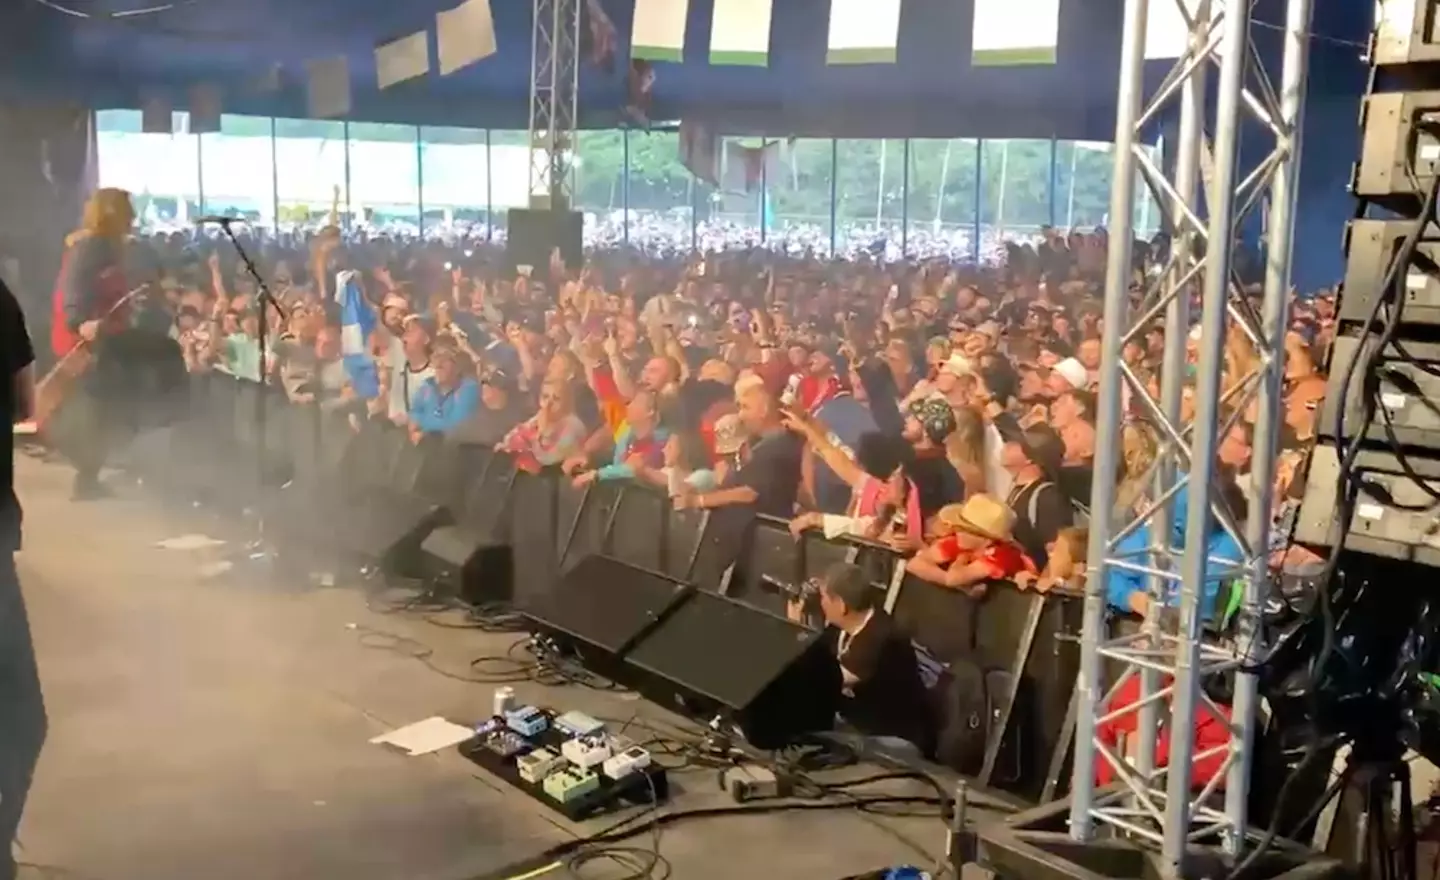 Jamie Webster had the crowds chanting during his Glastonbury set.